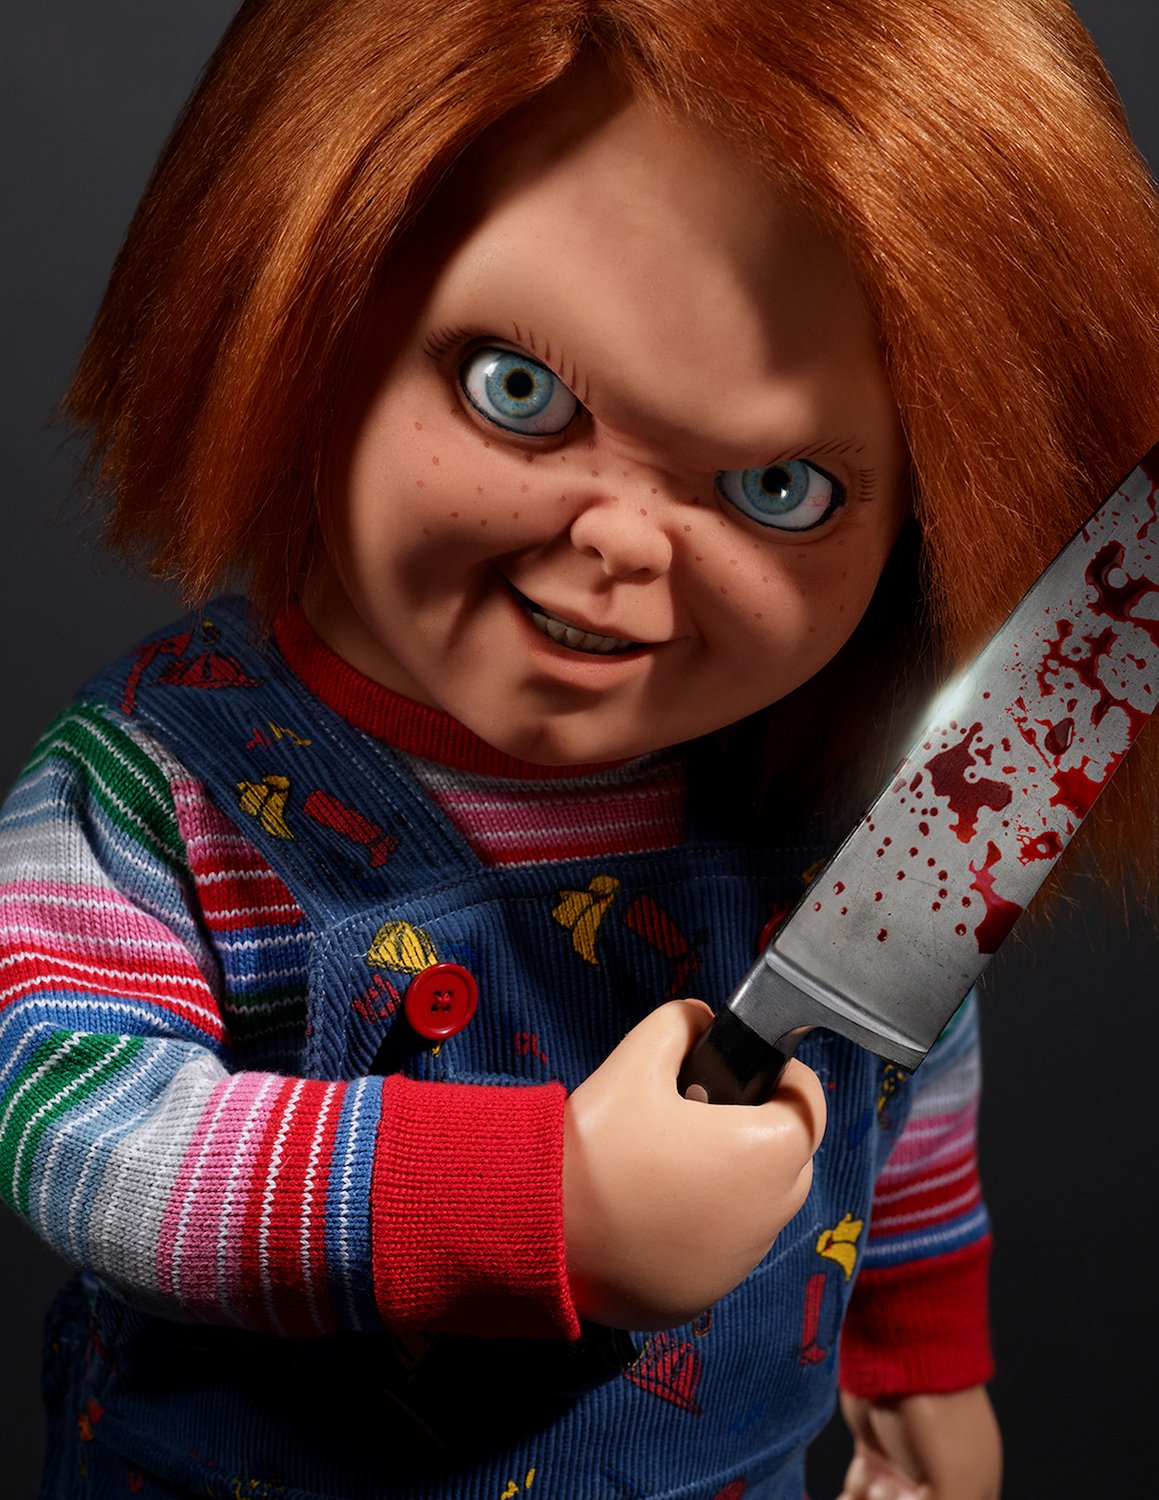 Chucky holds a bloody knife